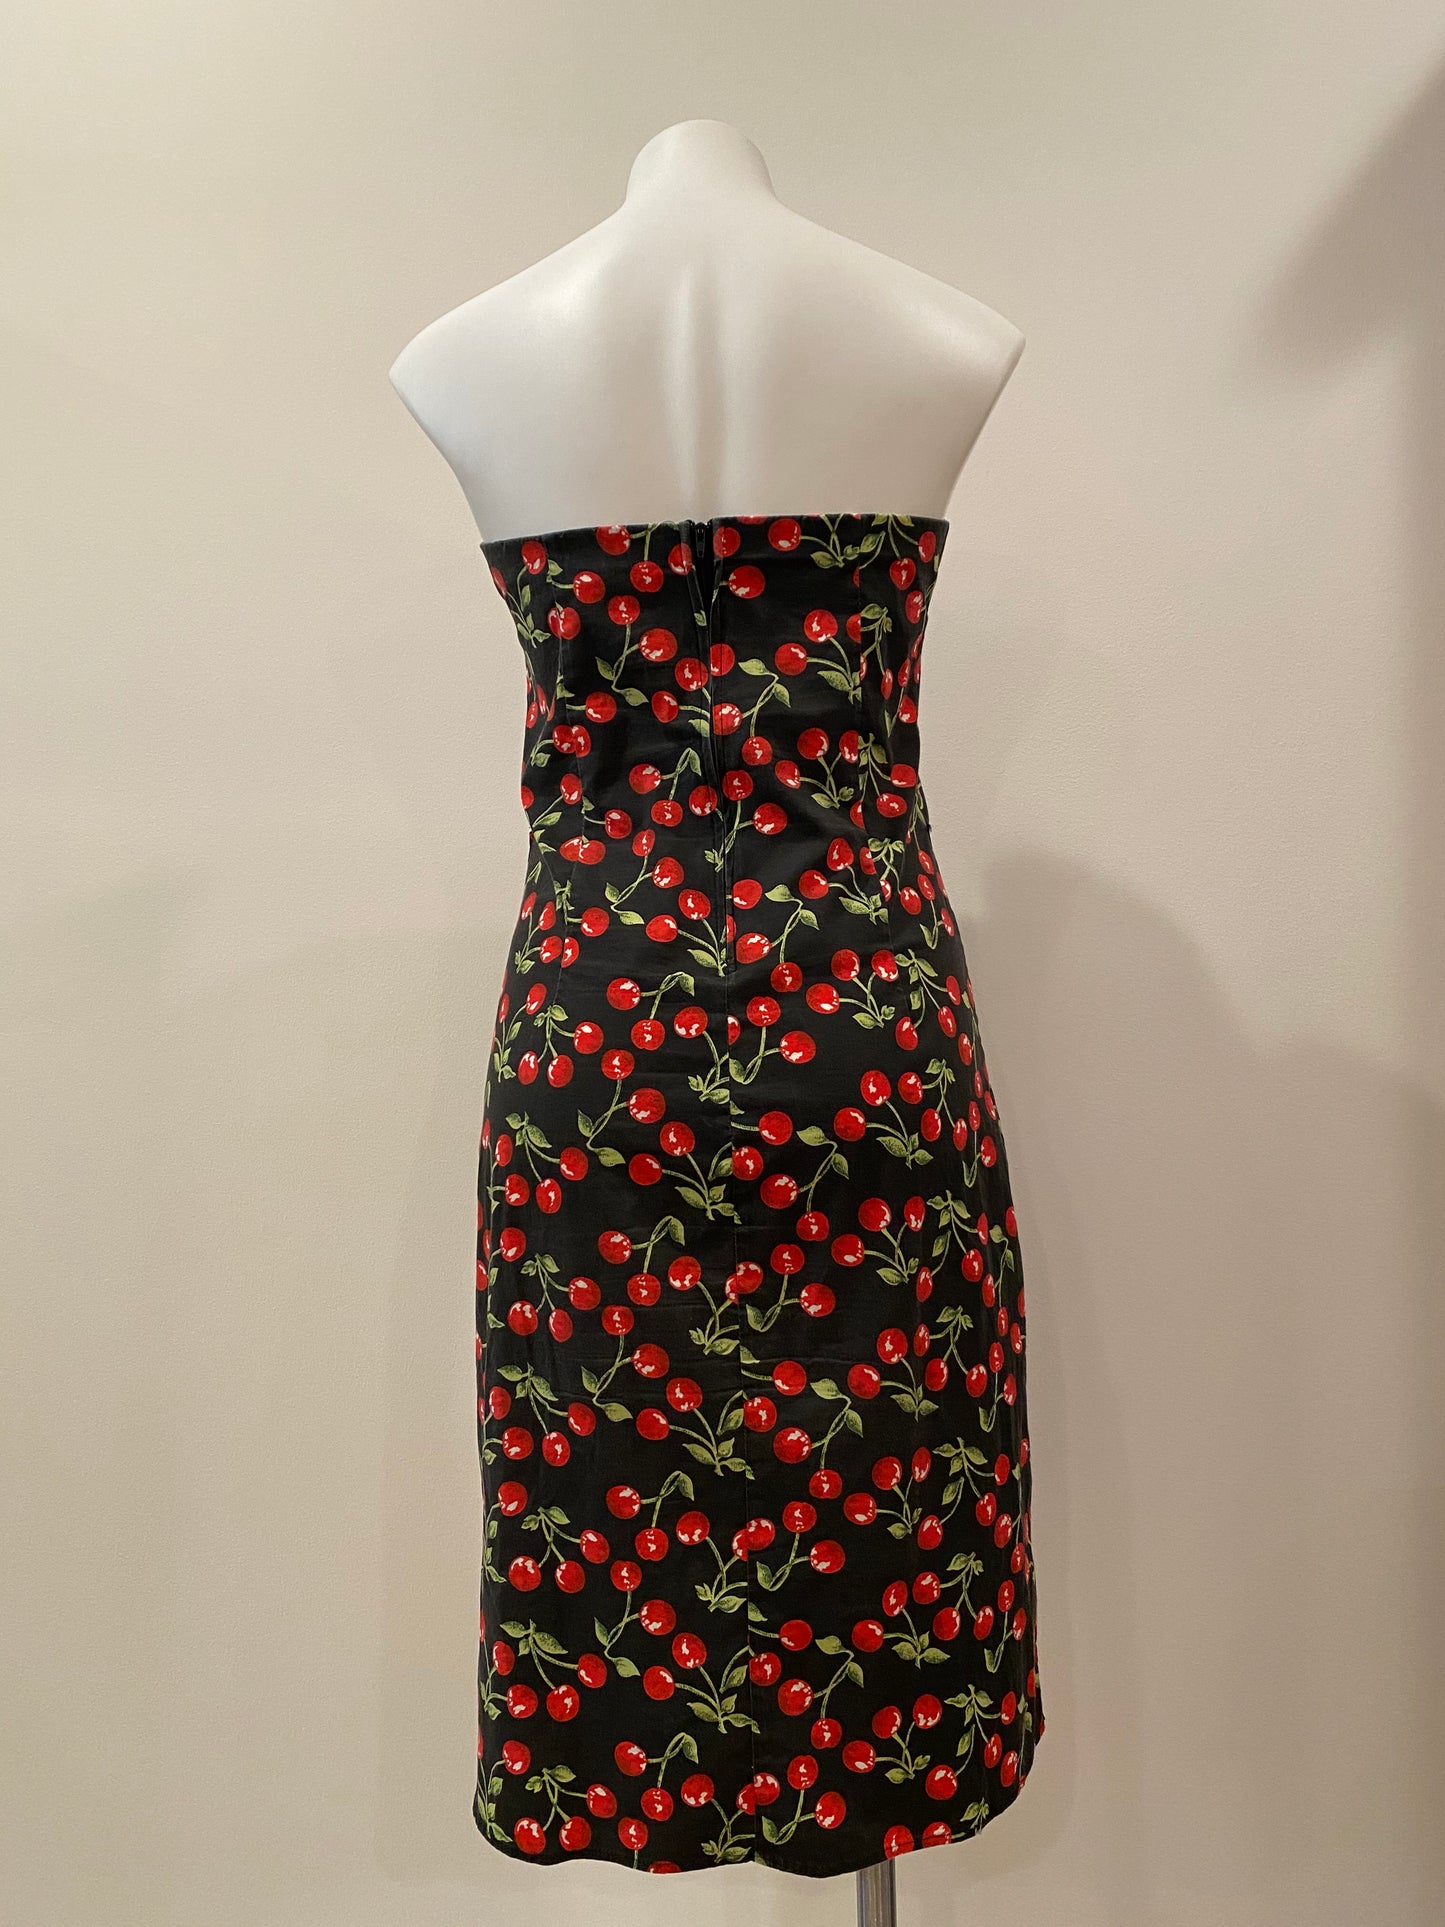 The Cherry Dress, 1990's